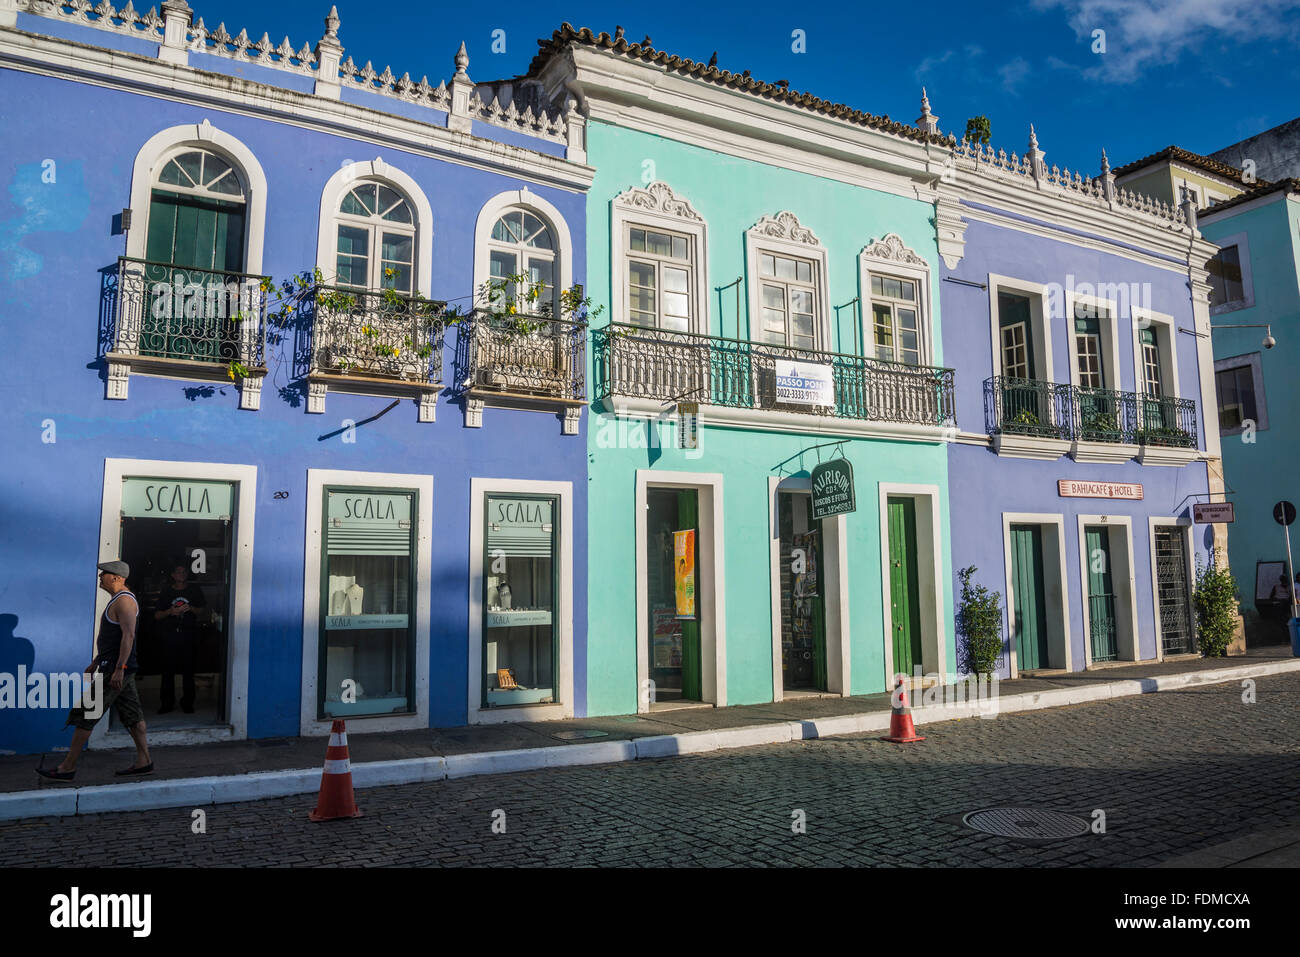 Portoghese architettura coloniale, Praca de Se, Bahia, Brasile Foto Stock